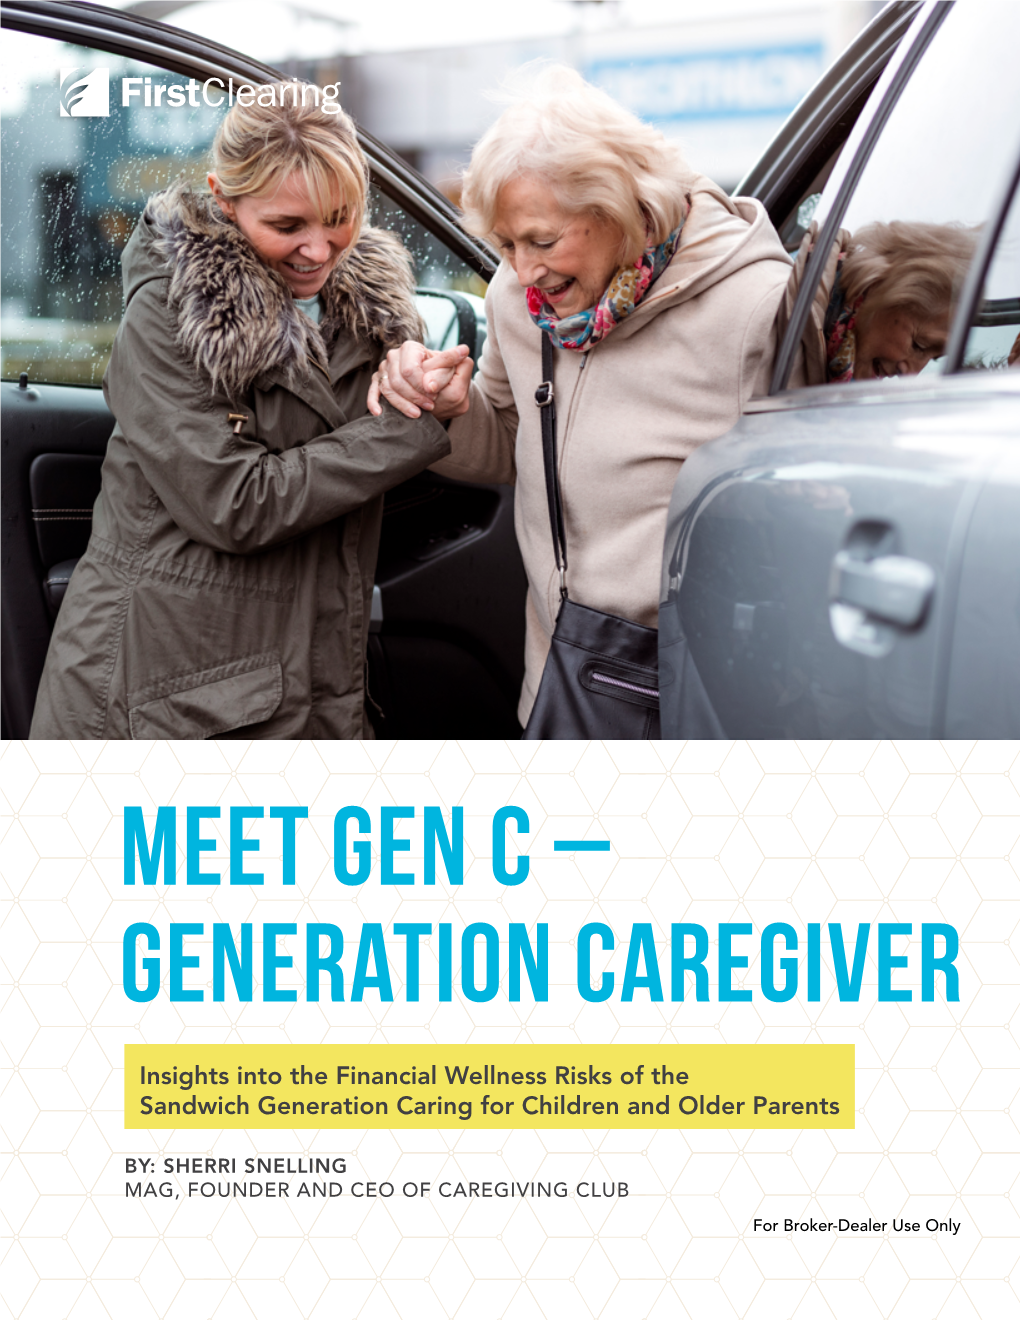 Generation Caregiver